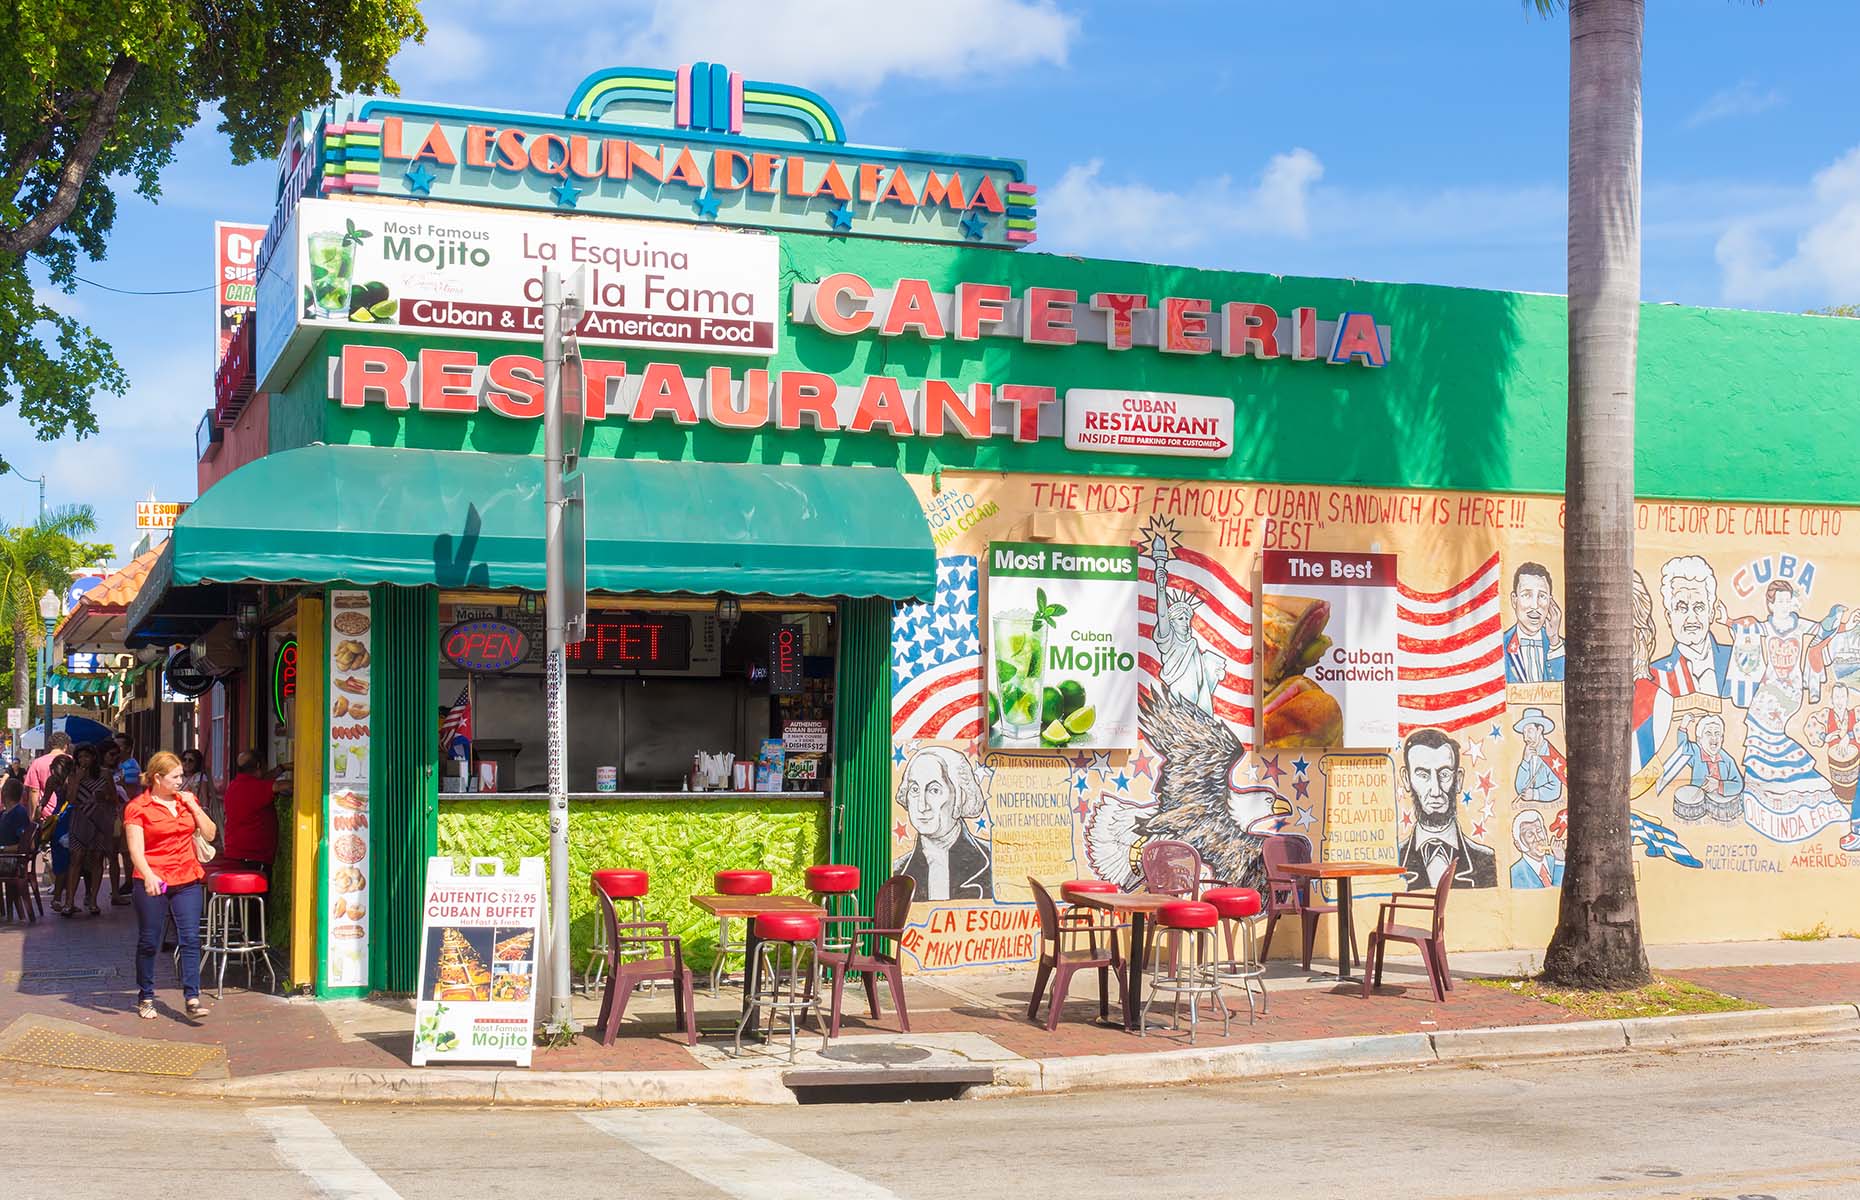 Calle Ocho in Miami (Image: Kamira/Shutterstock)